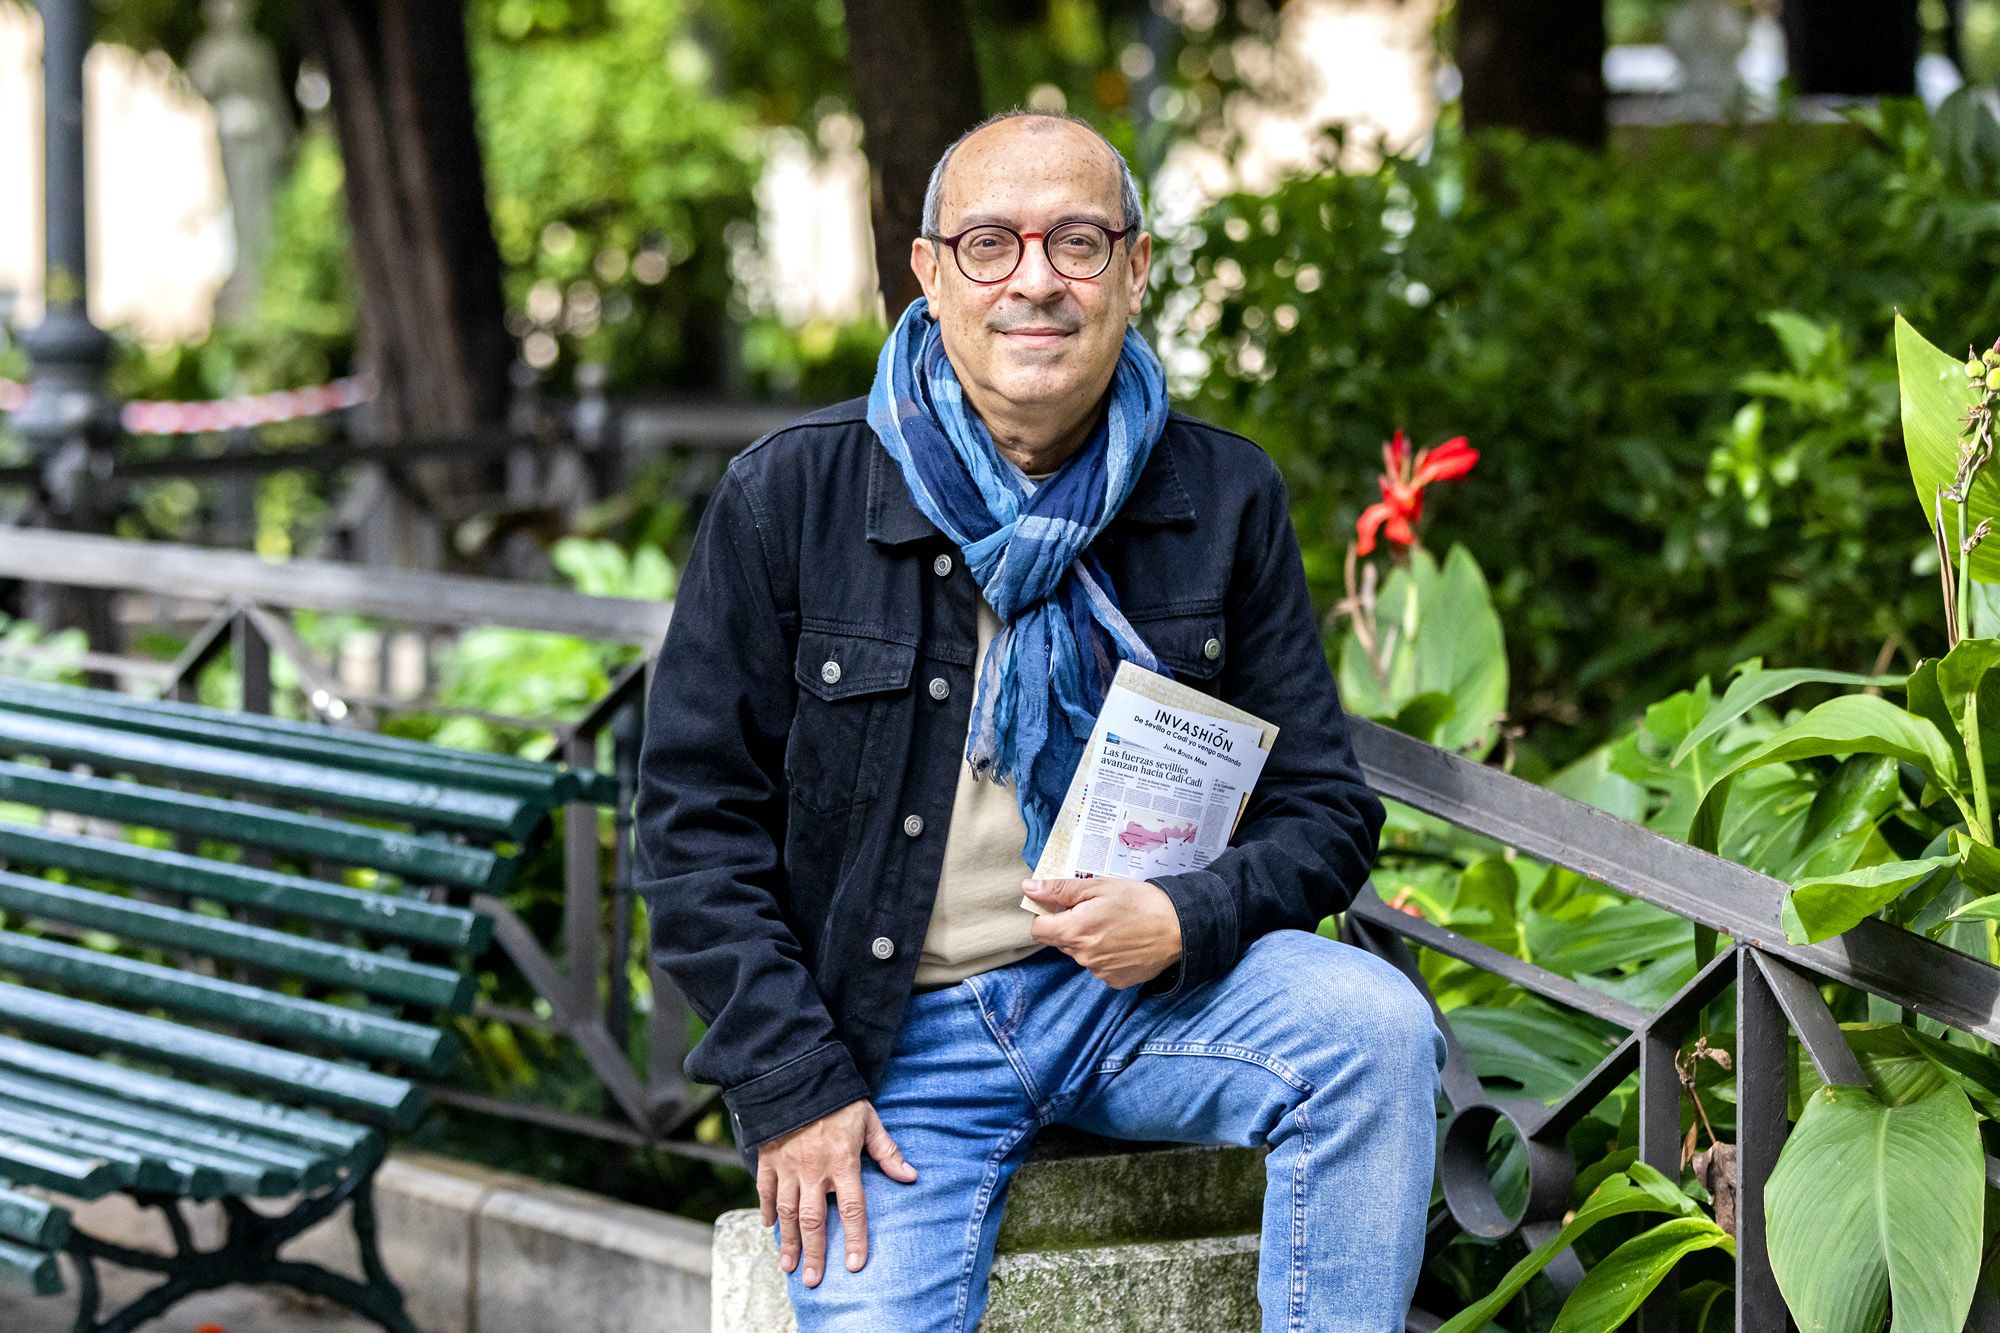 Juan Bouza posa con su libro 'Invashión. De Sevilla a Cadi yo vengo andando'.